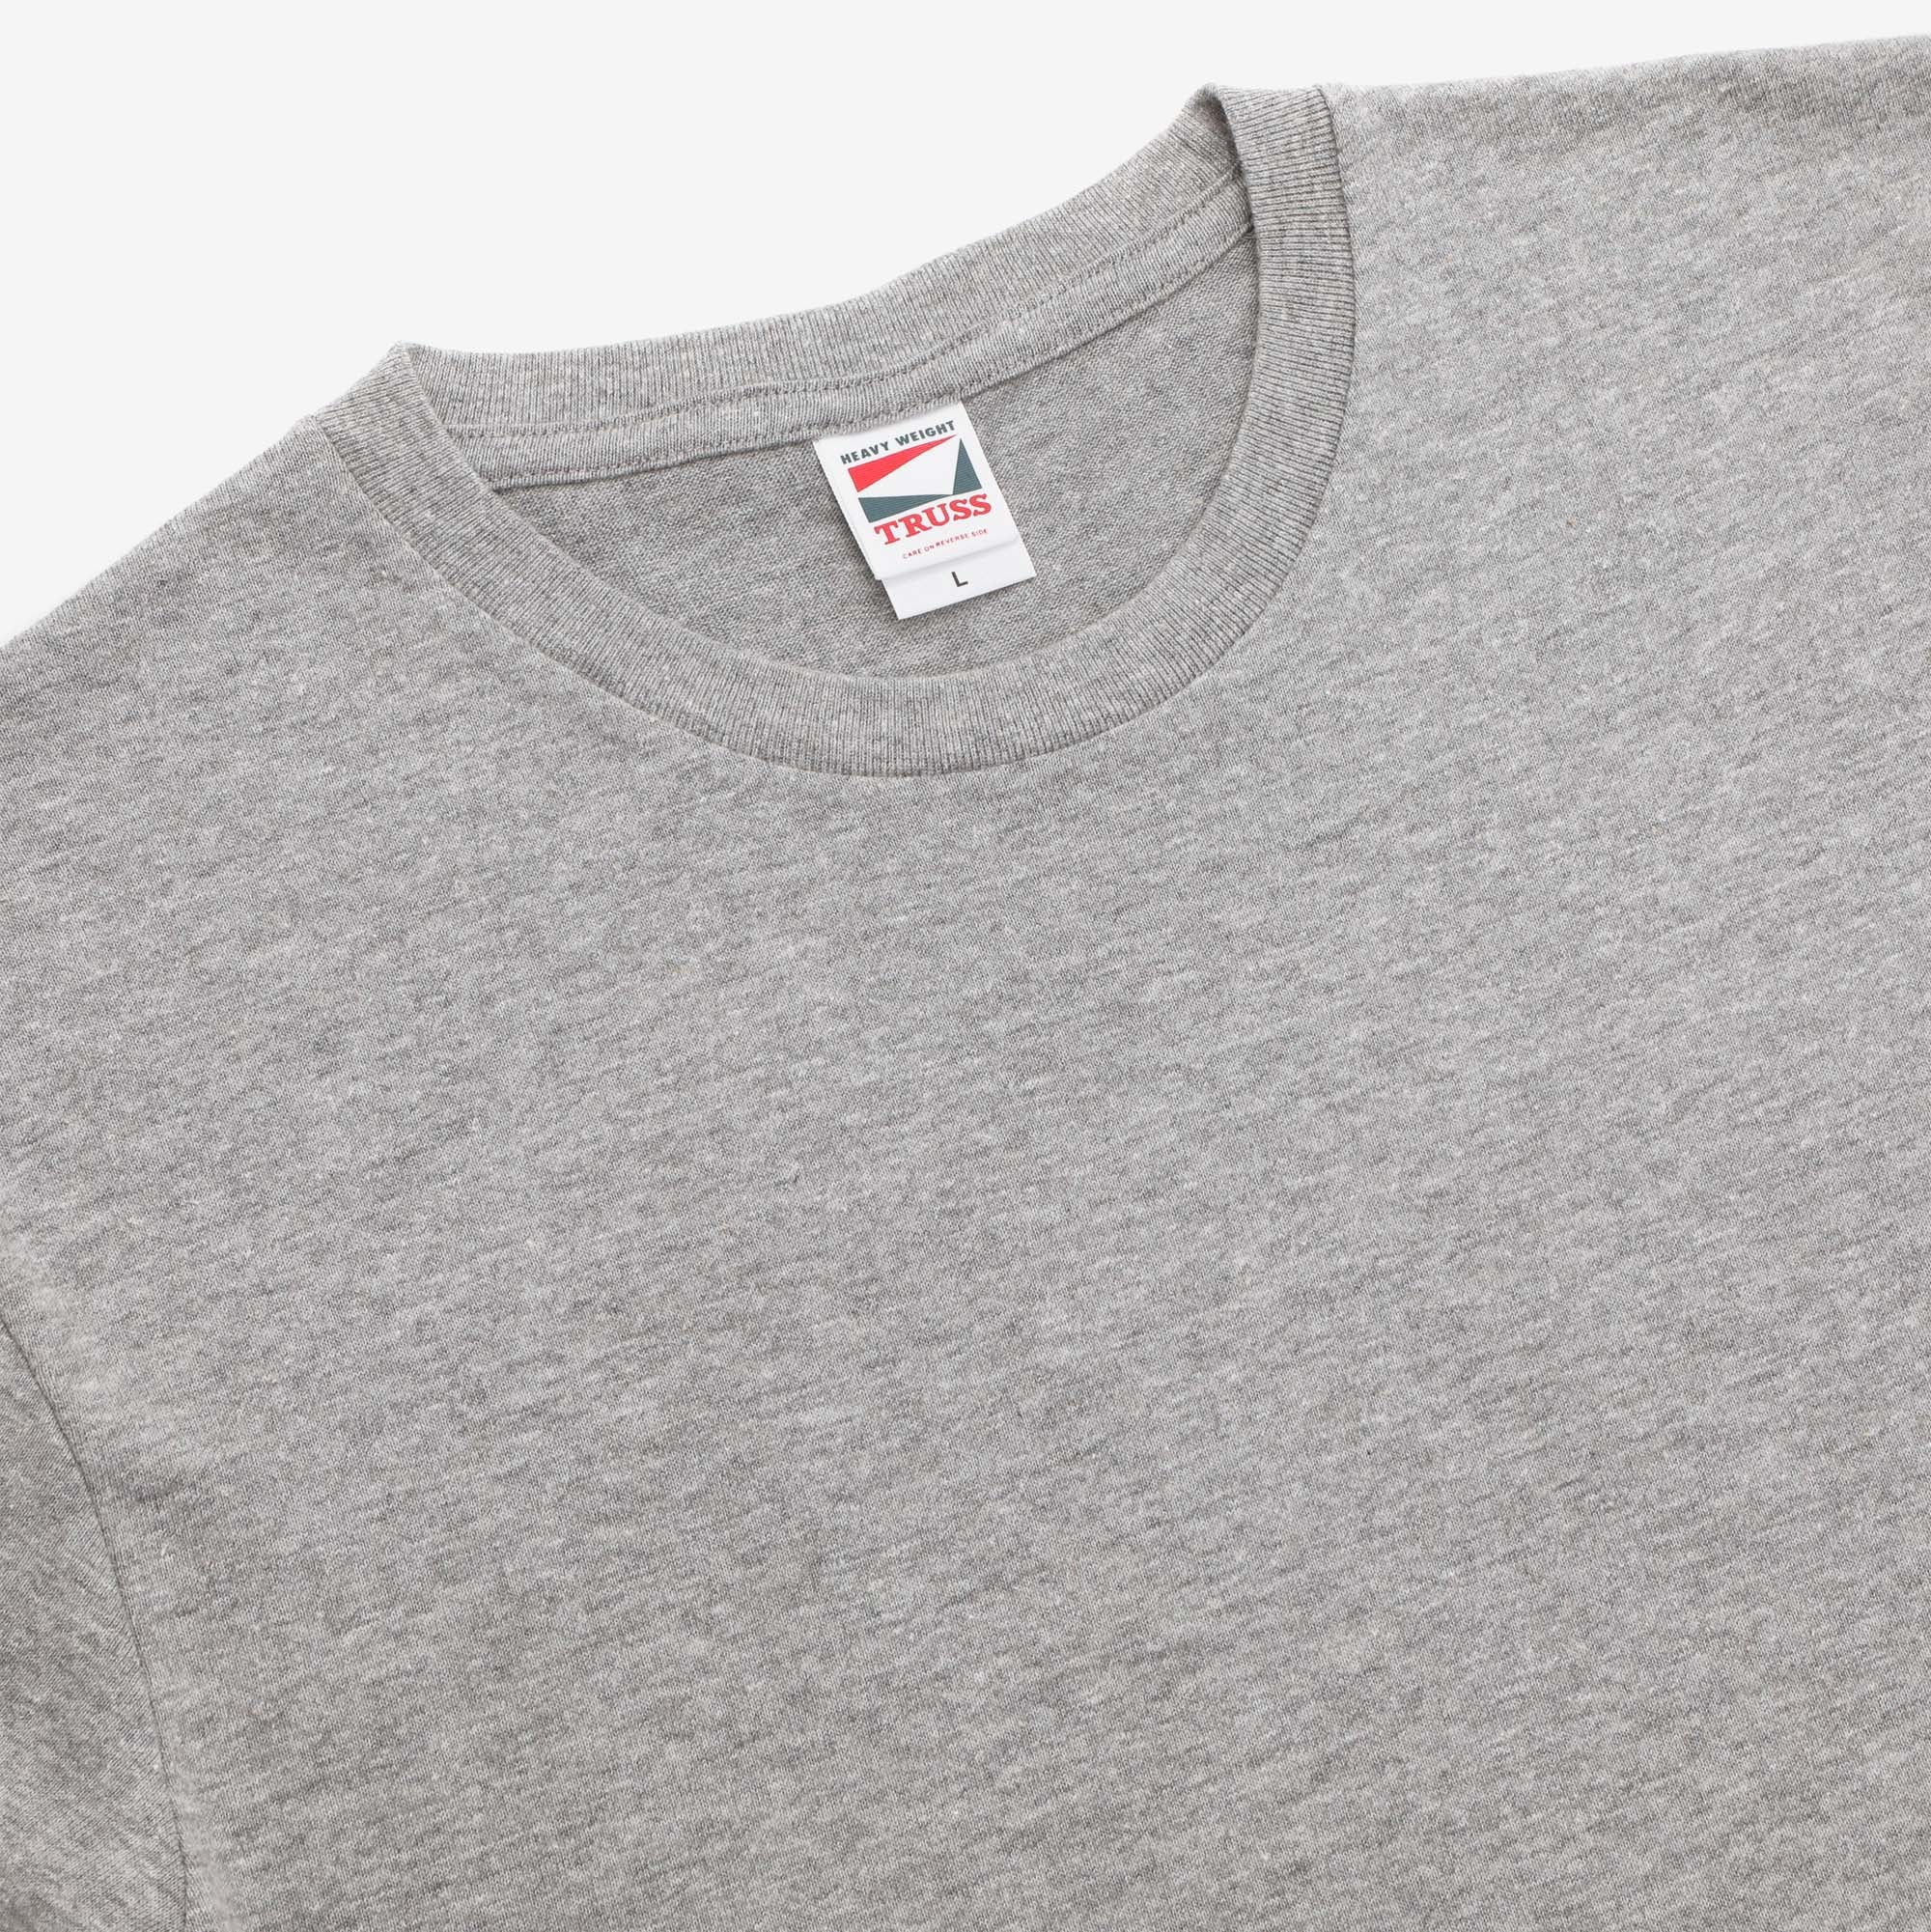 Cotton T-Shirt - Grey